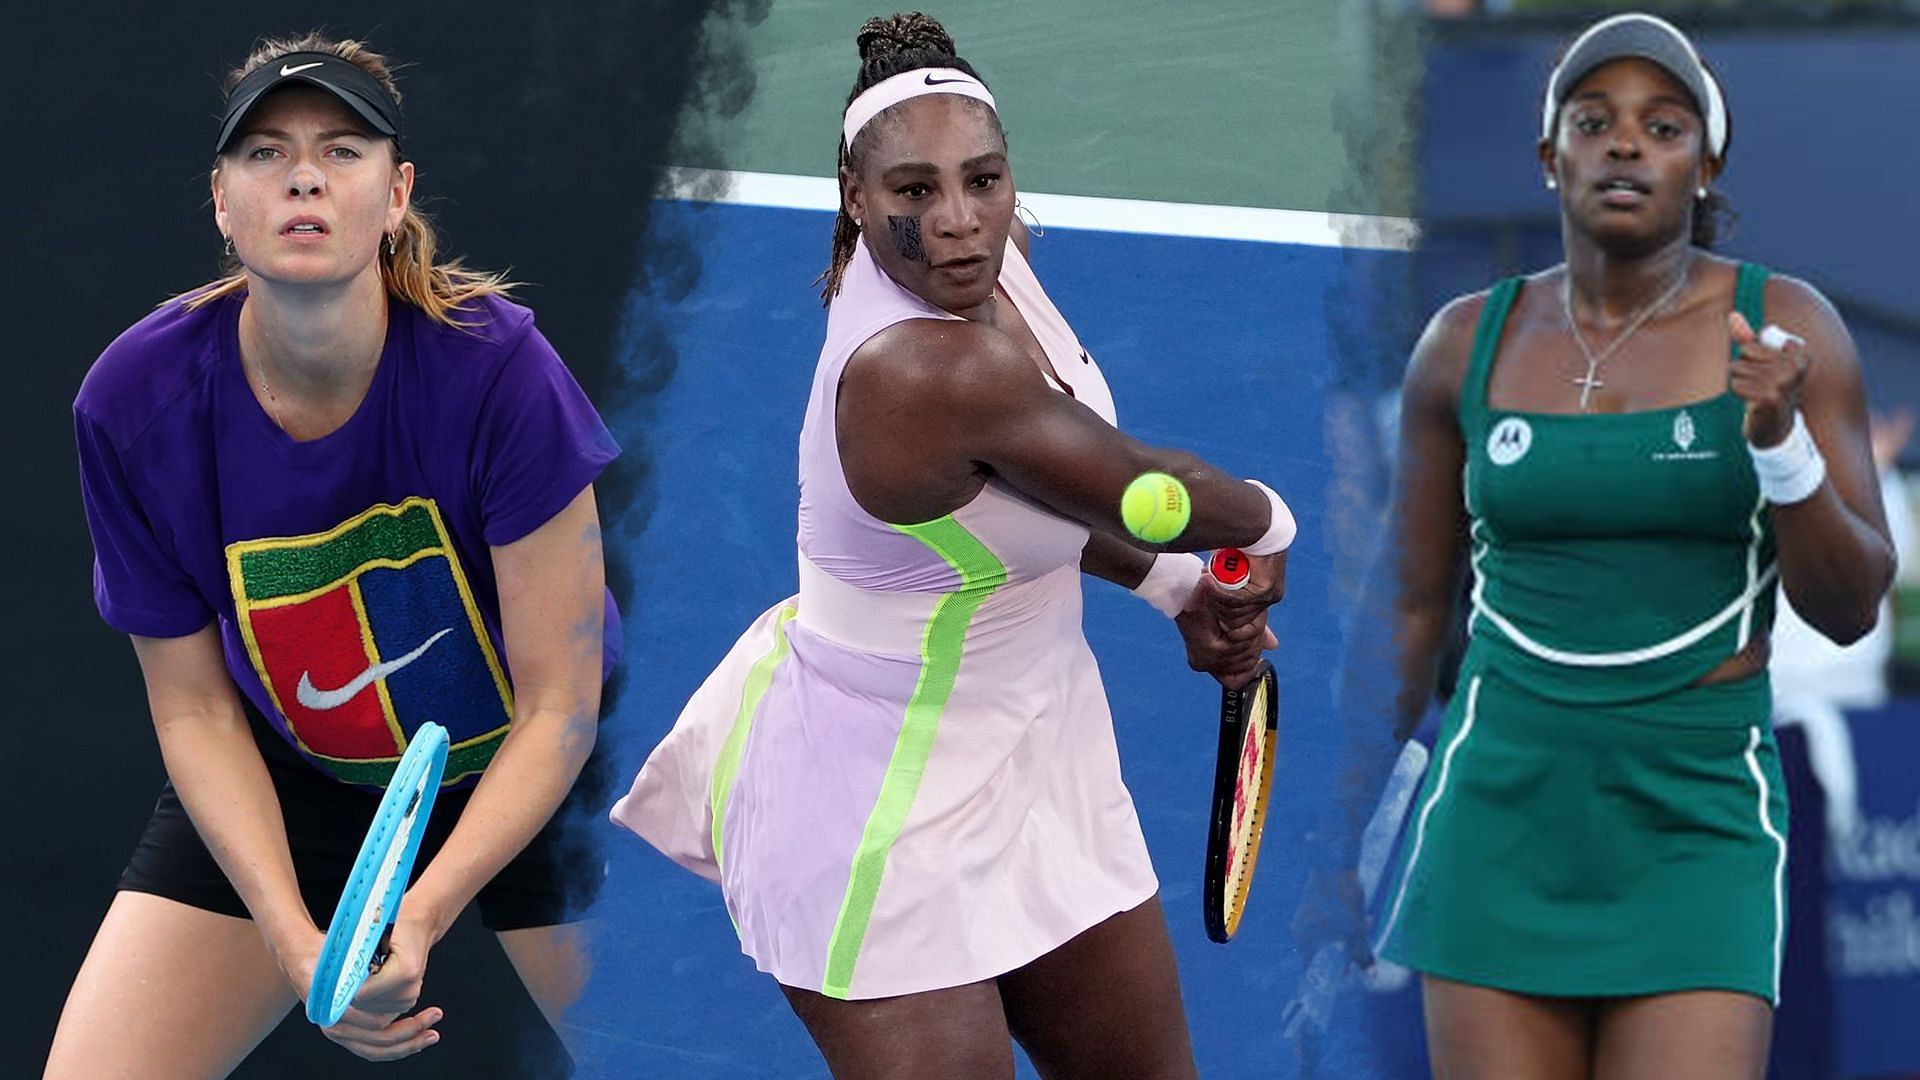 From L-R: Maria Sharapova, Serena Williams and Sloane Stephens.